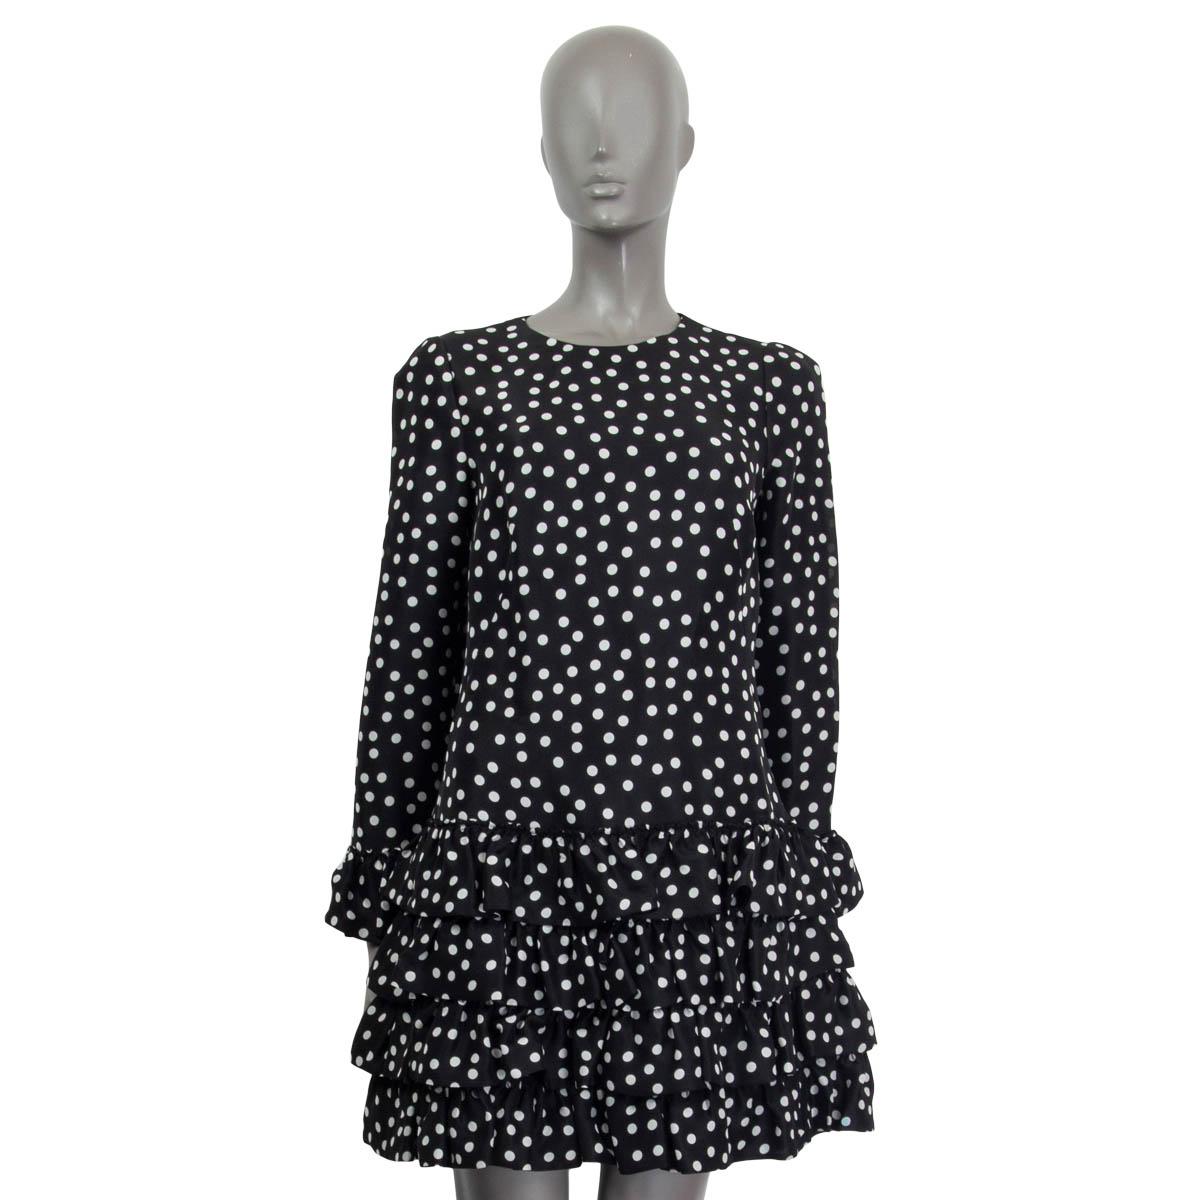 dolce and gabbana black and white polka dot dress